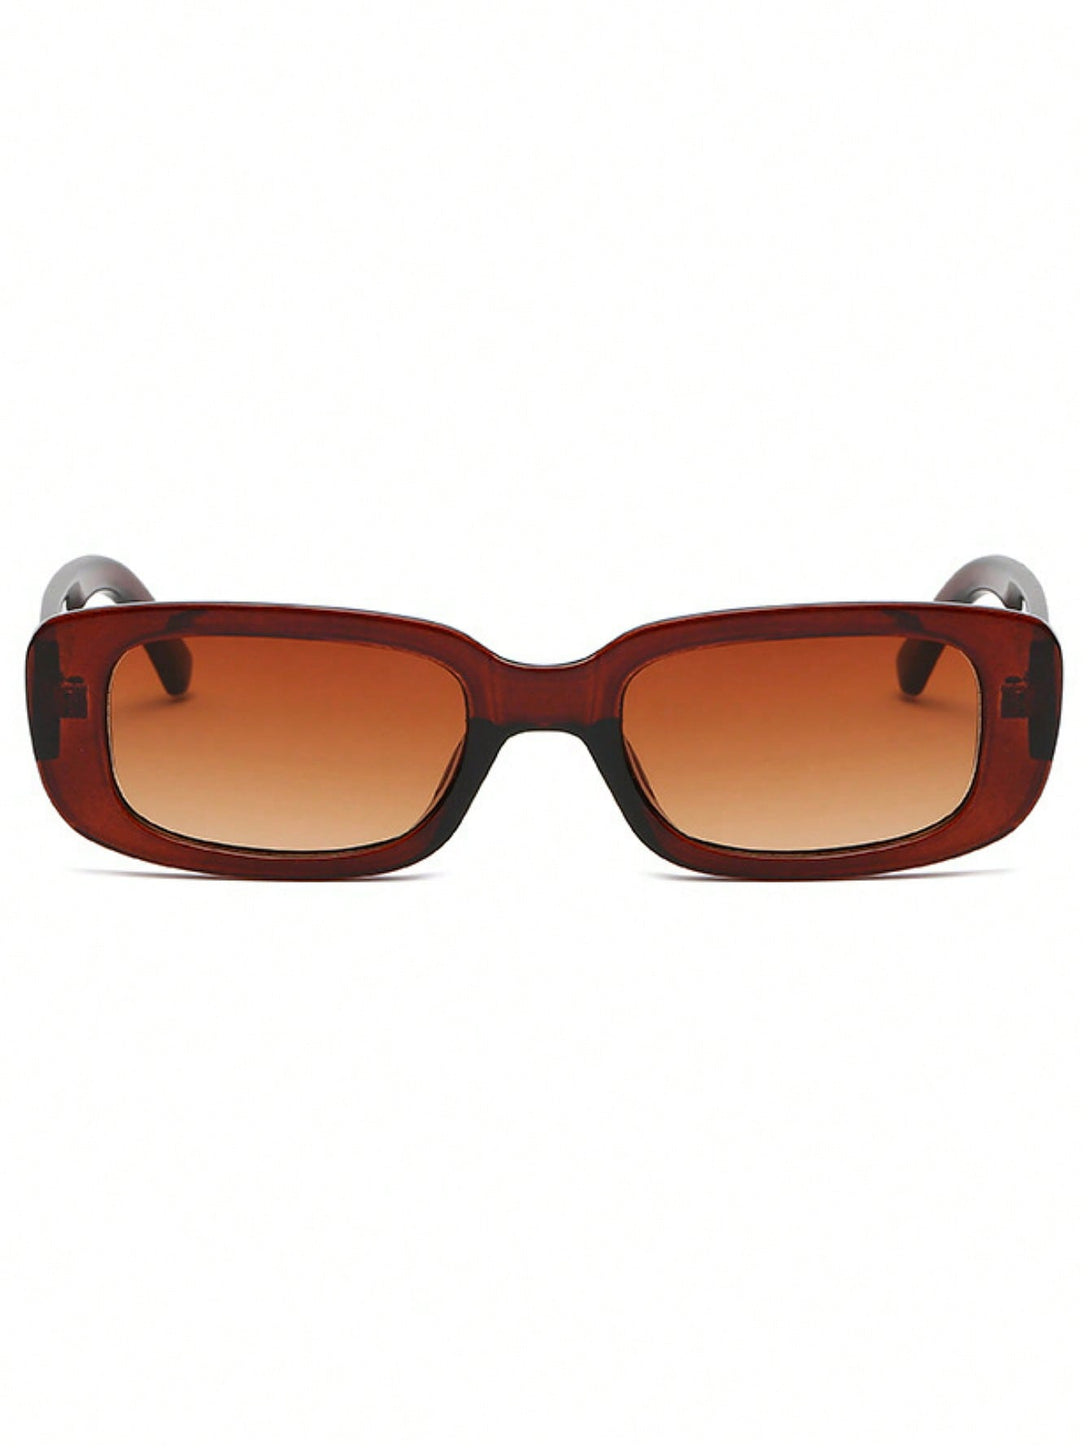 1pair Women Tortoiseshell Frame Fashion Glasses For Outdoor - Negative Apparel